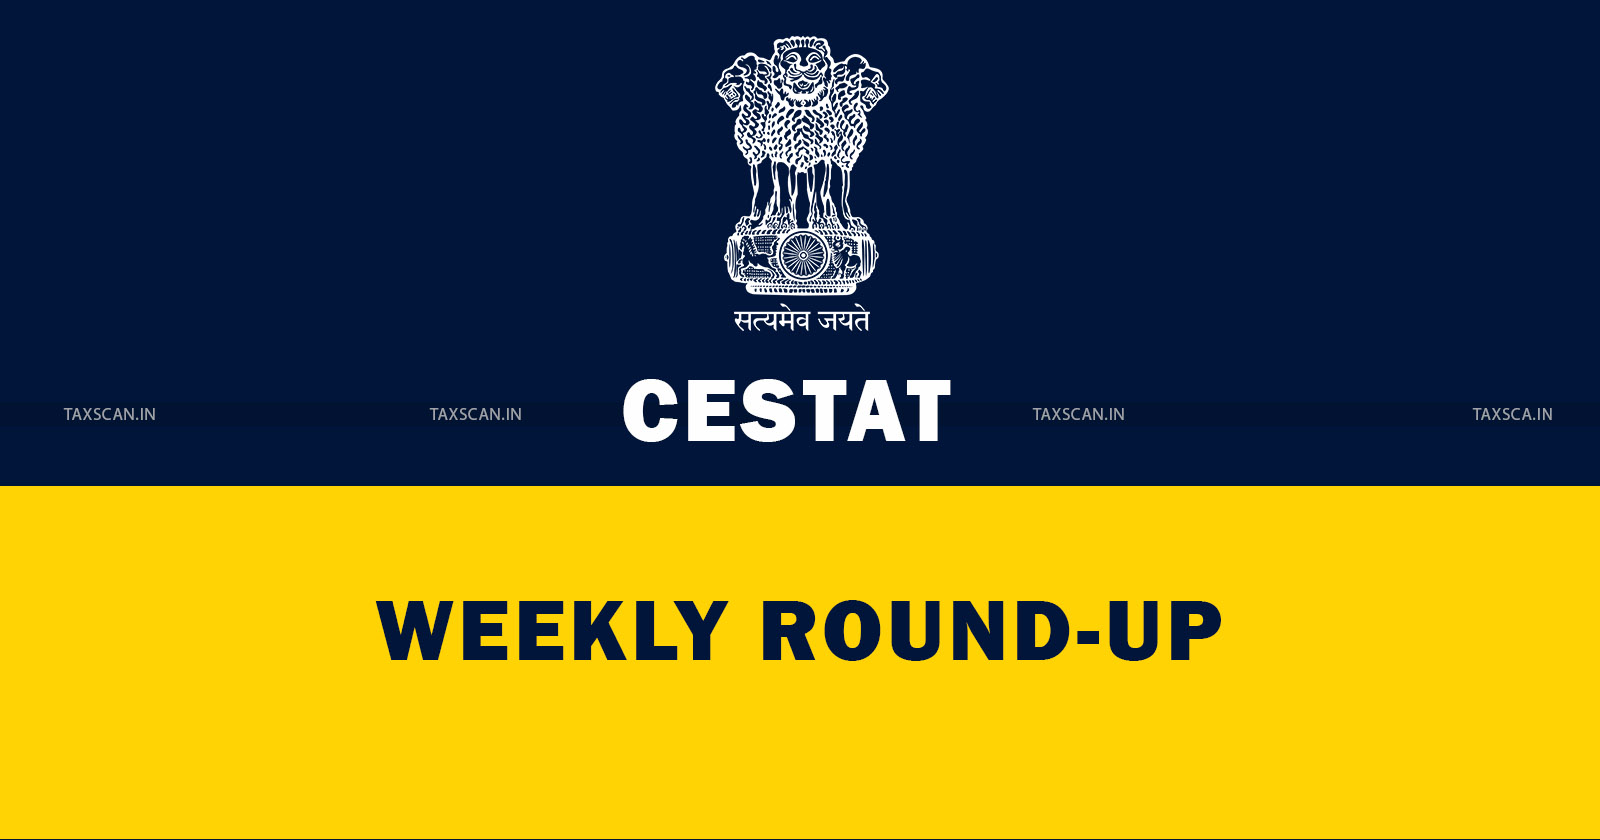 CESTAT - CESTAT news - Customs tribunal updates - Excise updates - Service tax news - CESTAT weekly highlights - taxscan